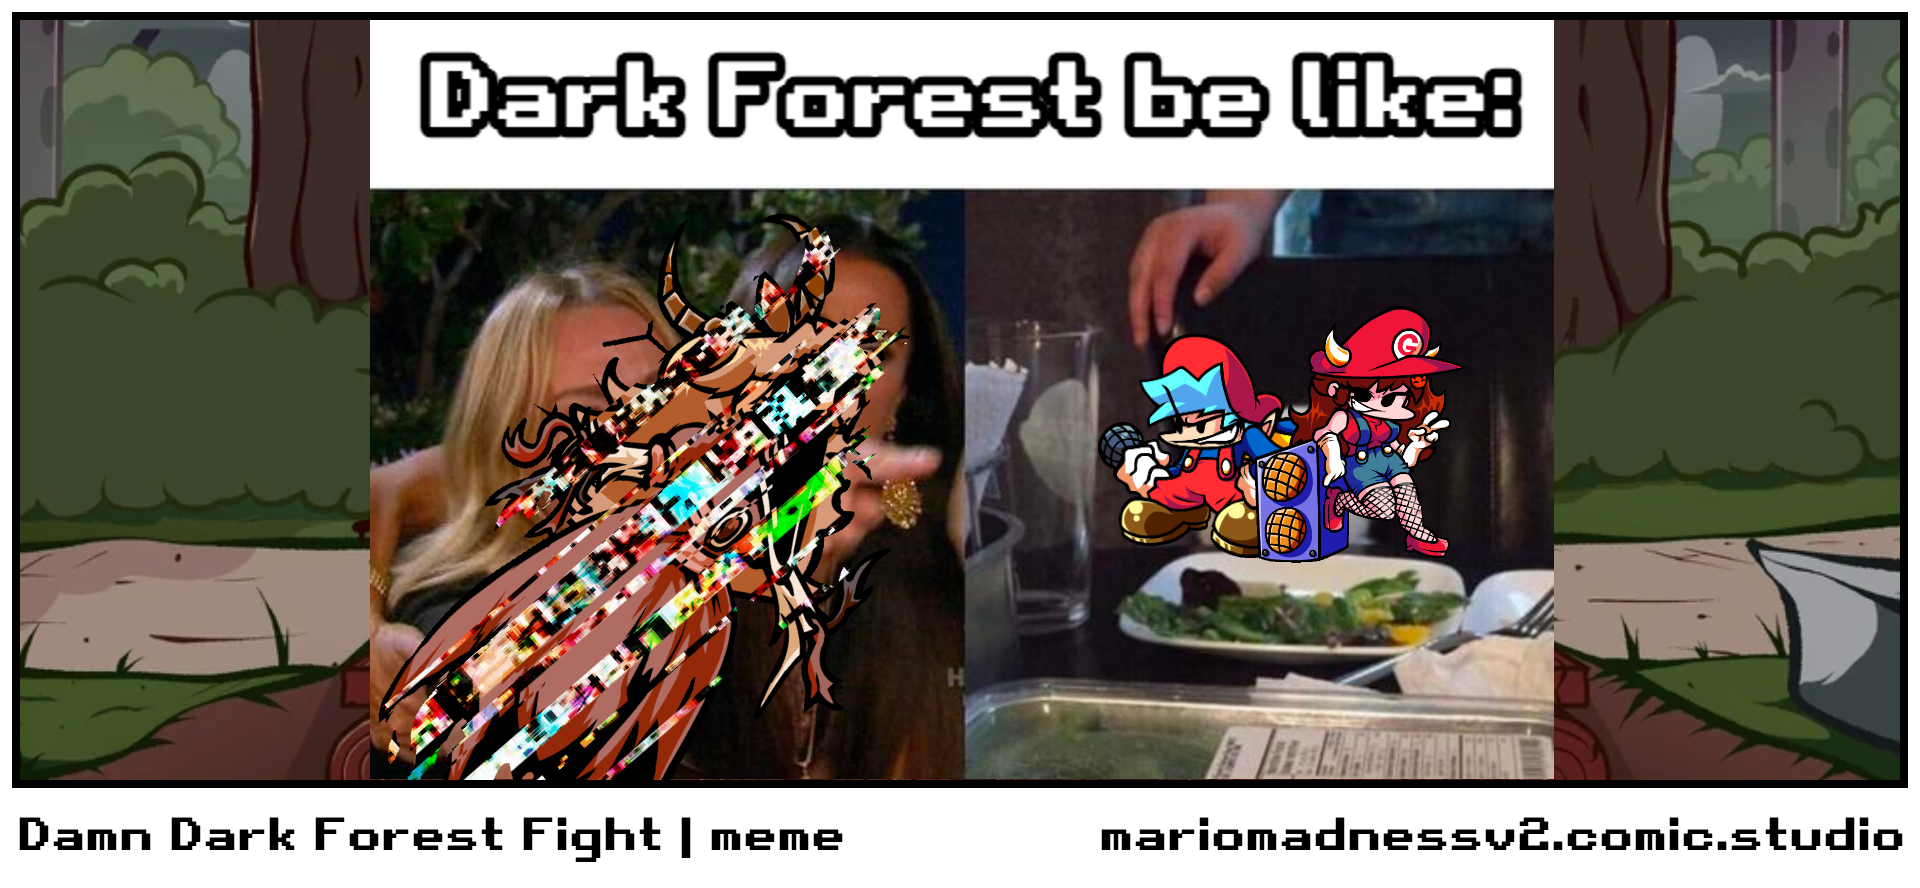 Damn Dark Forest Fight | meme